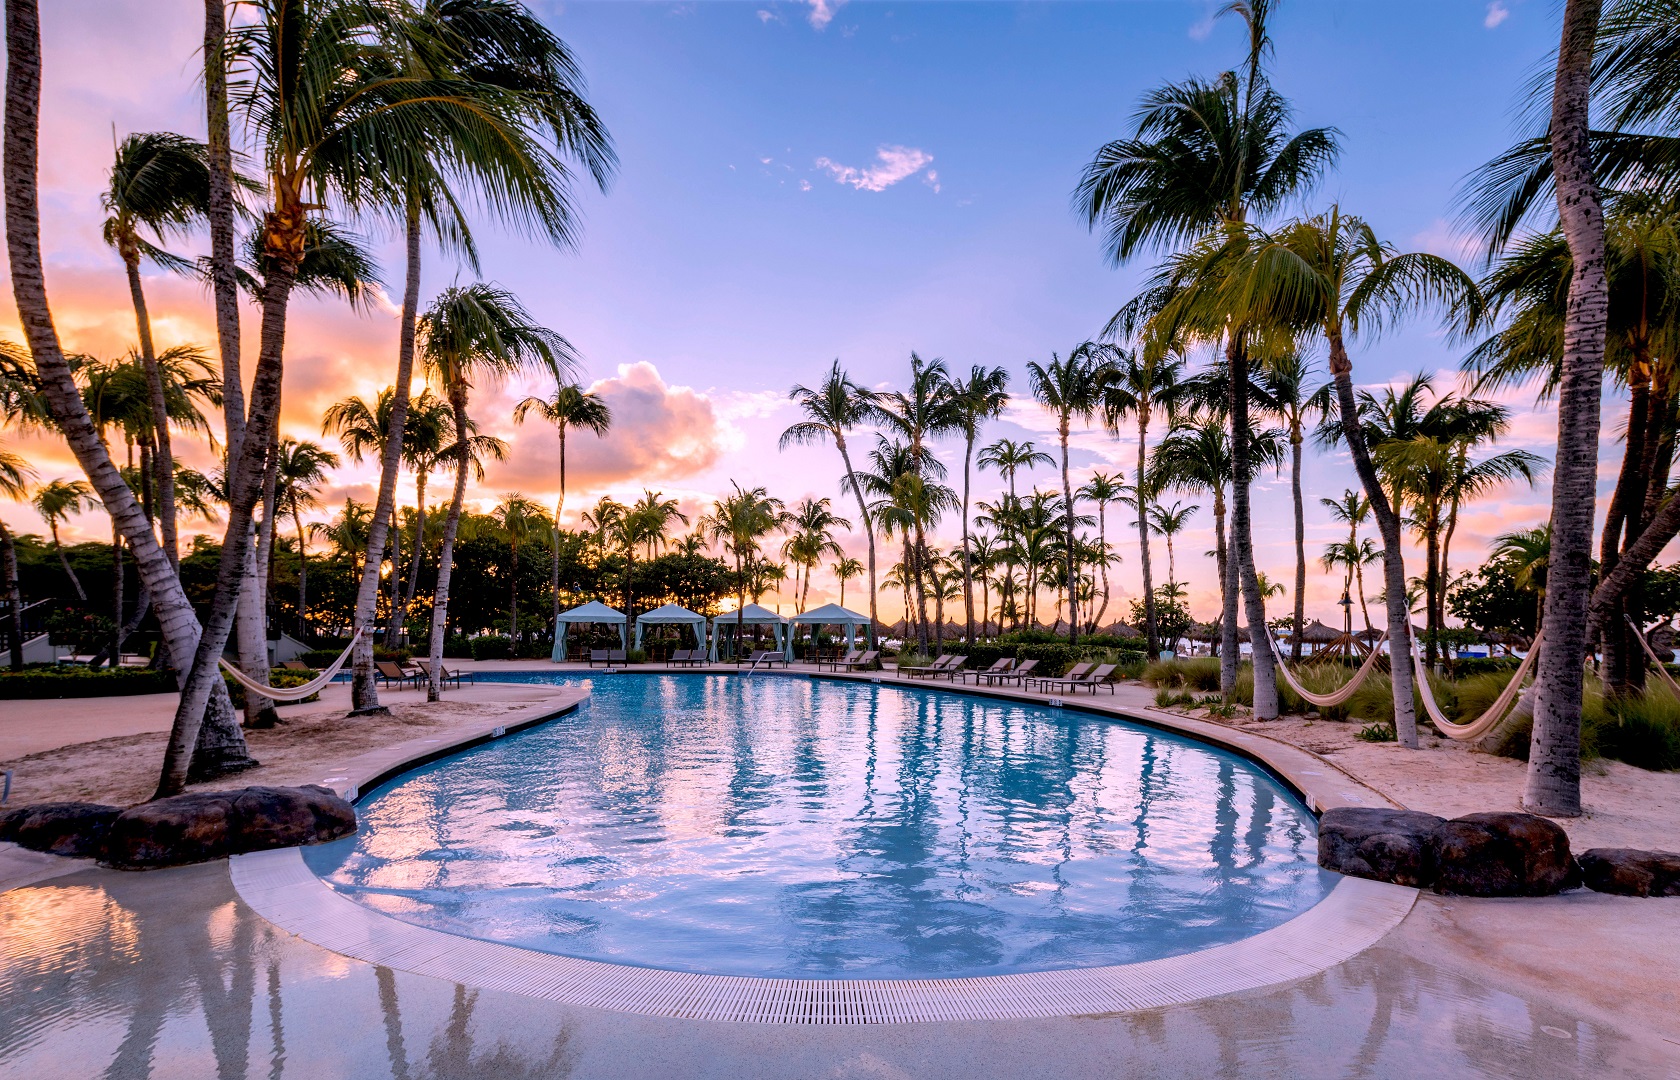 Hilton Aruba Caribbean Resort & Casino Entry Pool